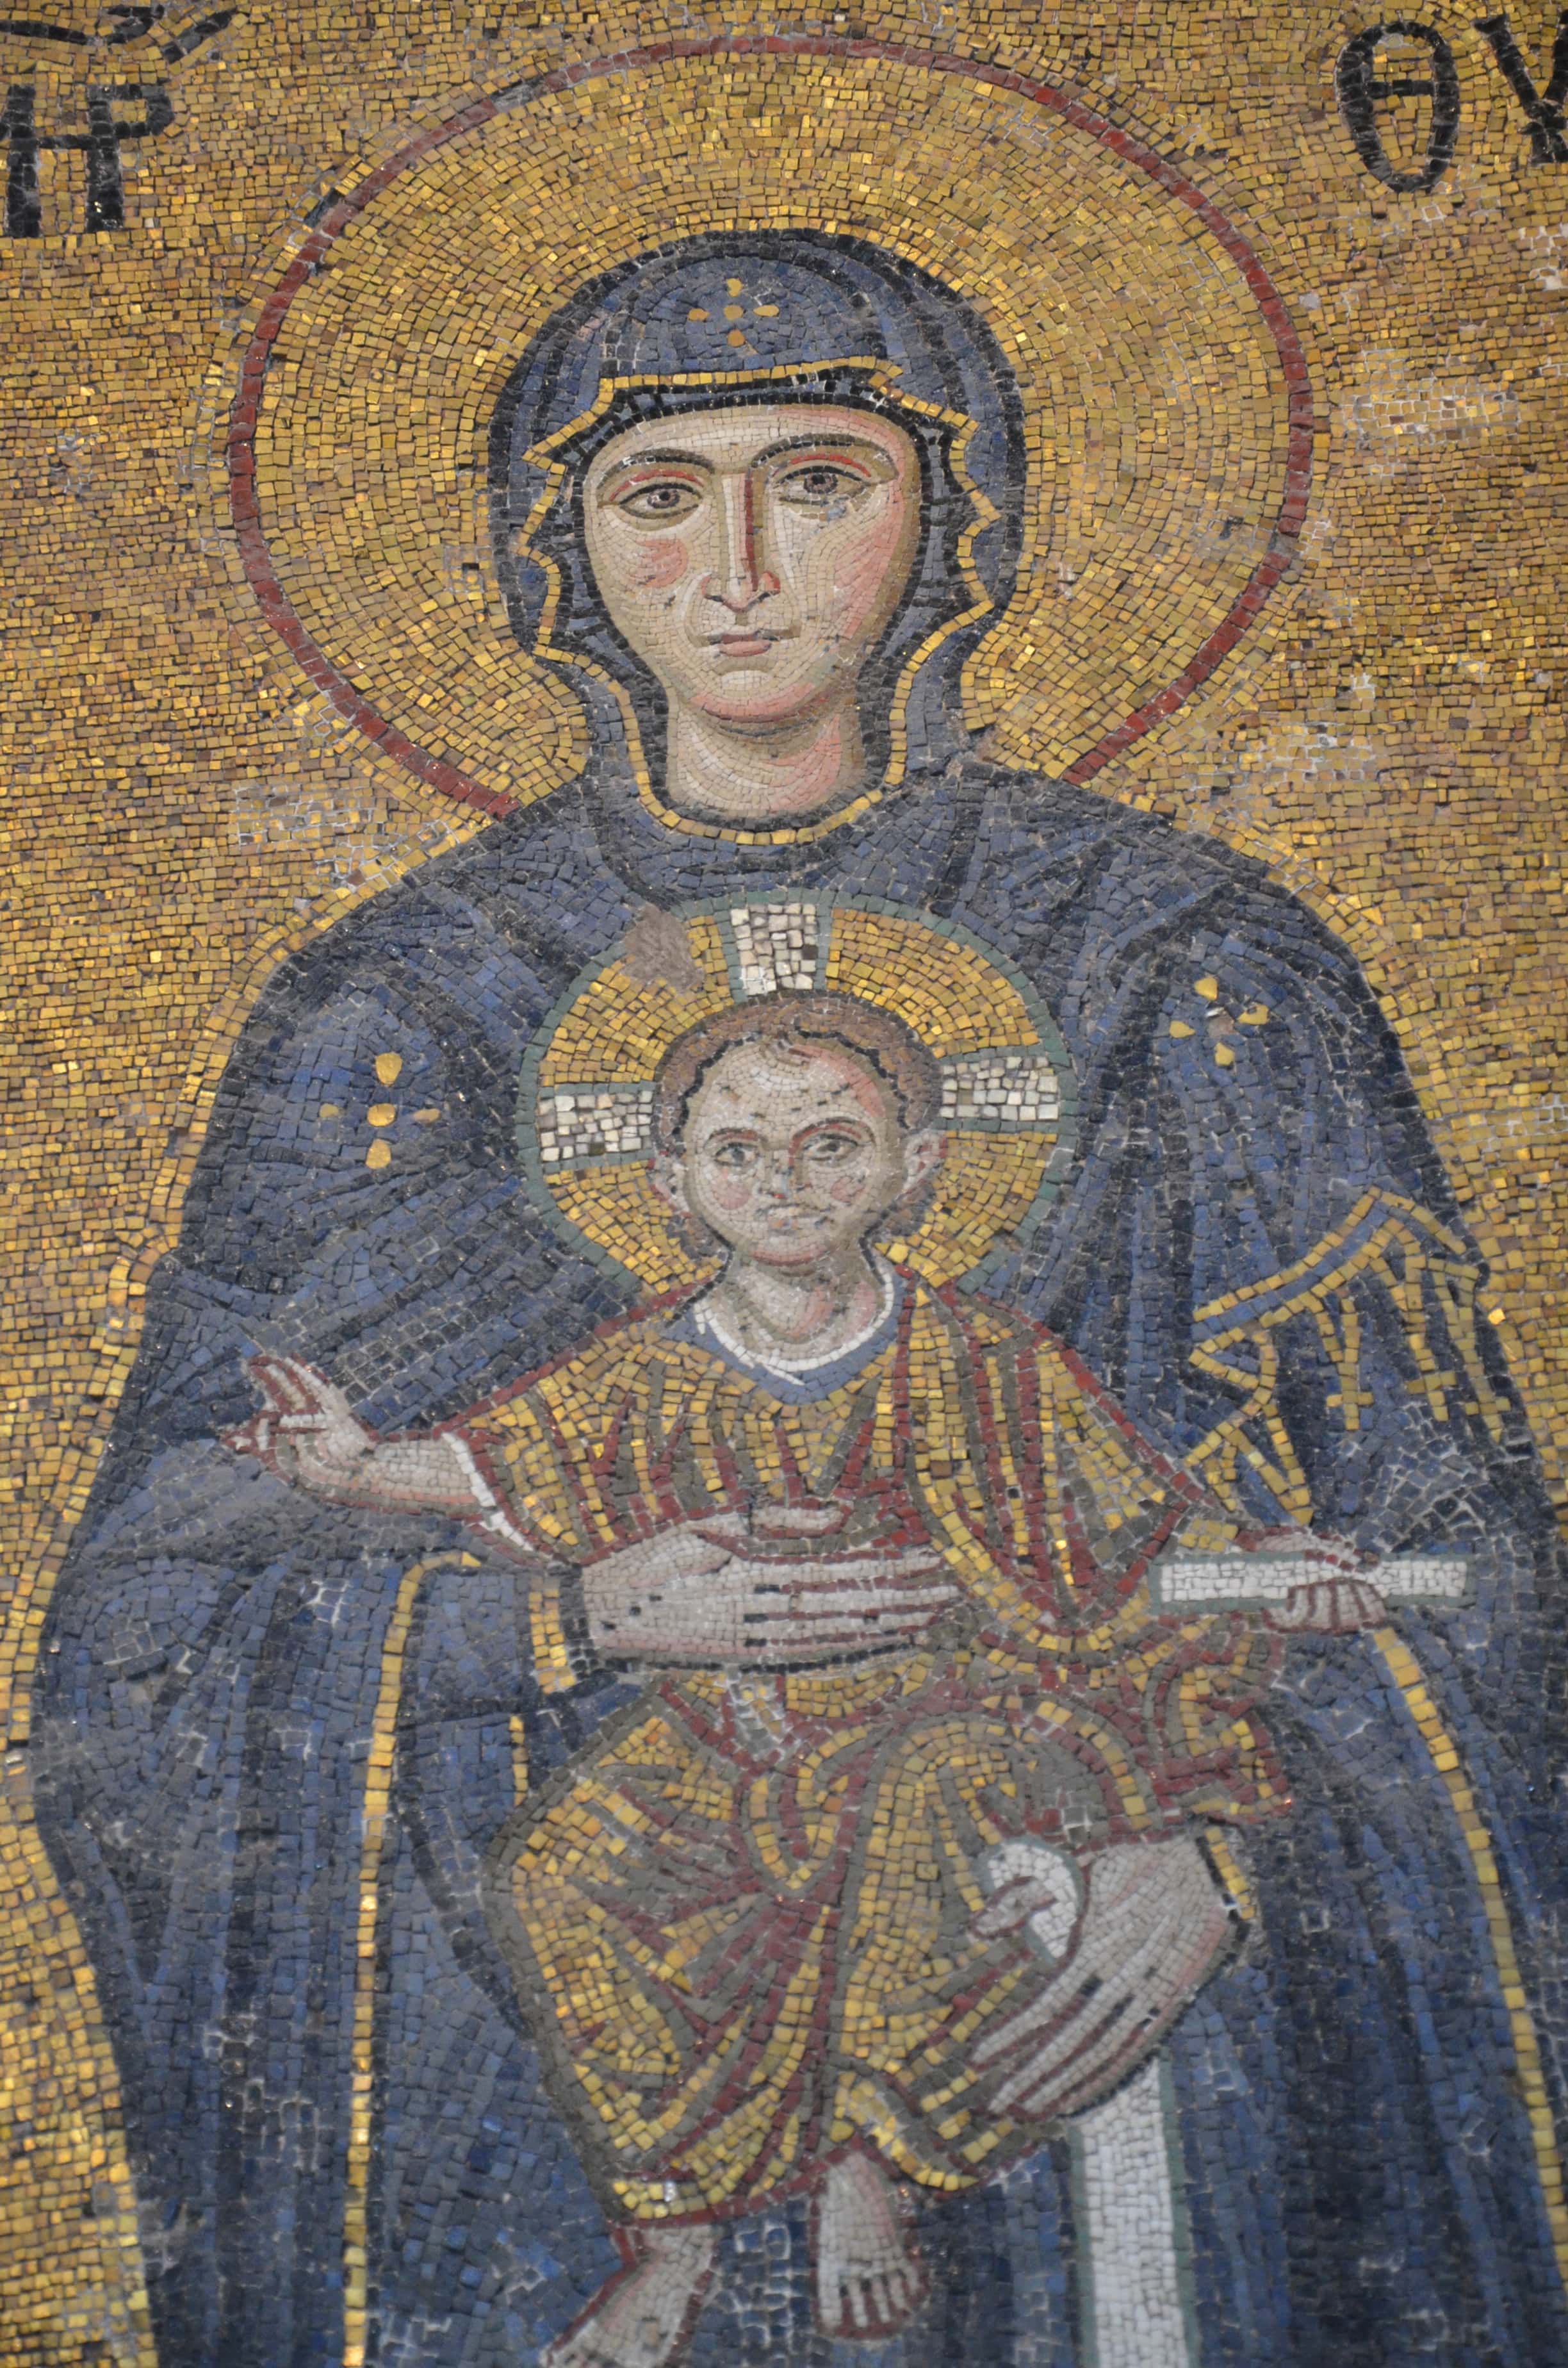 Komnenos mosaic at Hagia Sophia in Istanbul, Turkey